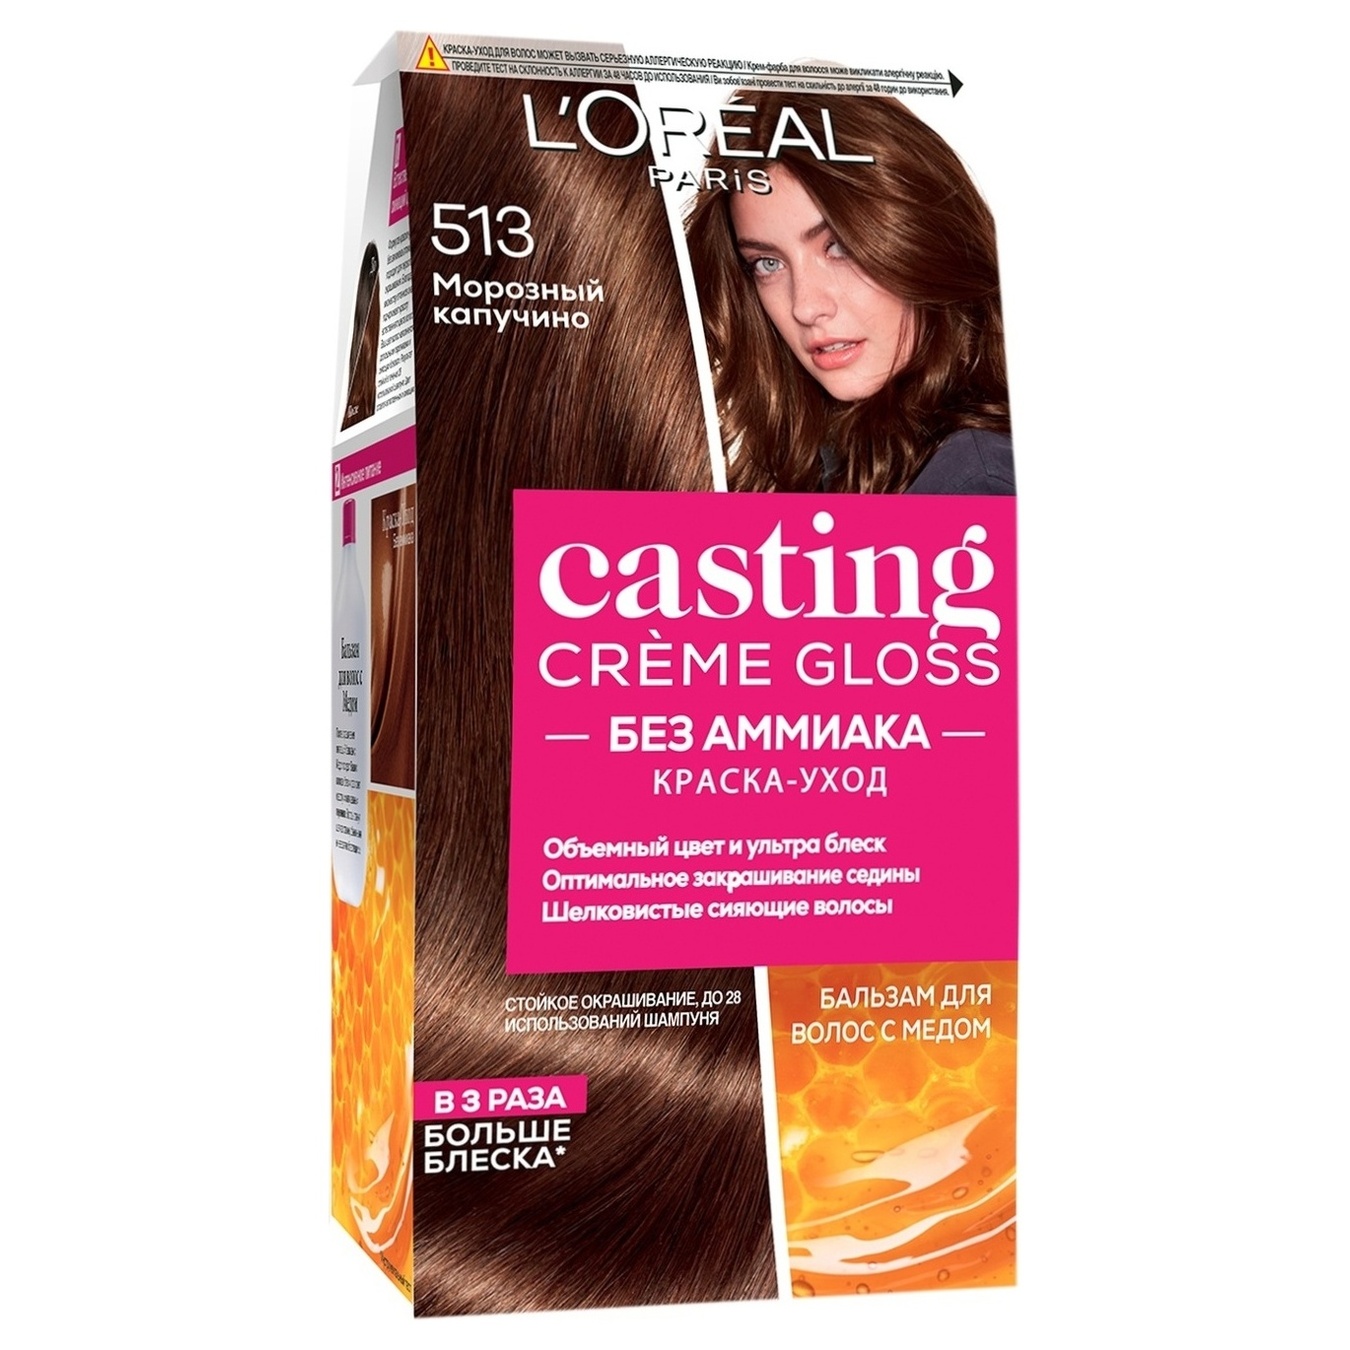 Крем-краска для волос без аммиака L'Oreal Paris Casting Creme Gloss 513 морозный капучино